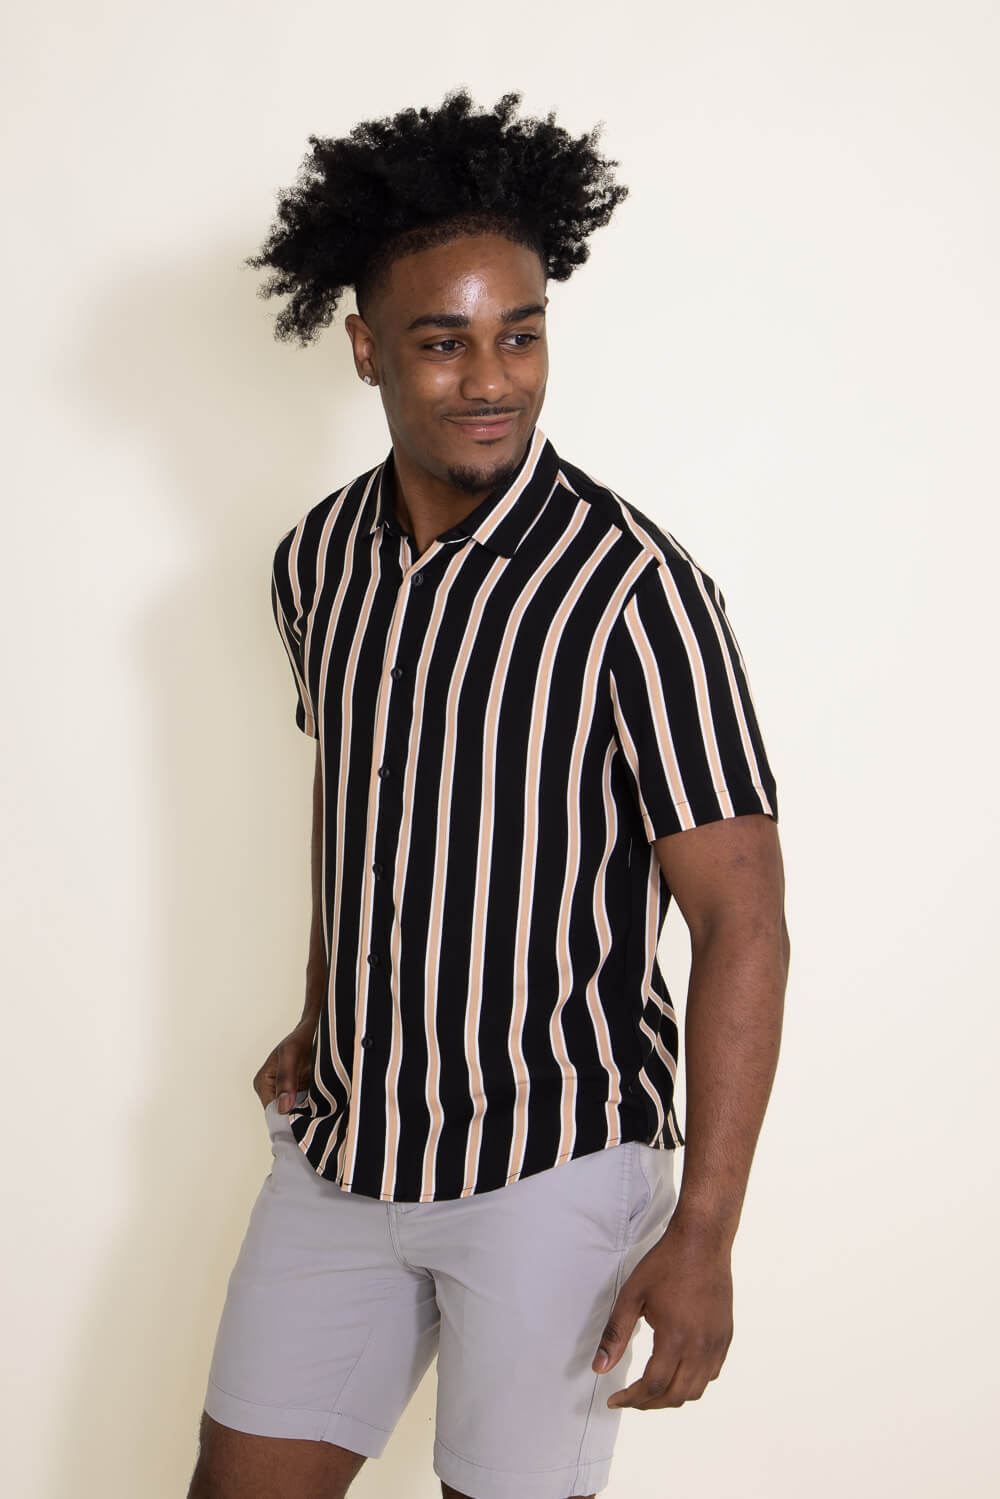 Throwback Stripes: Button-down shirt, Denim shorts & Wedge sandals